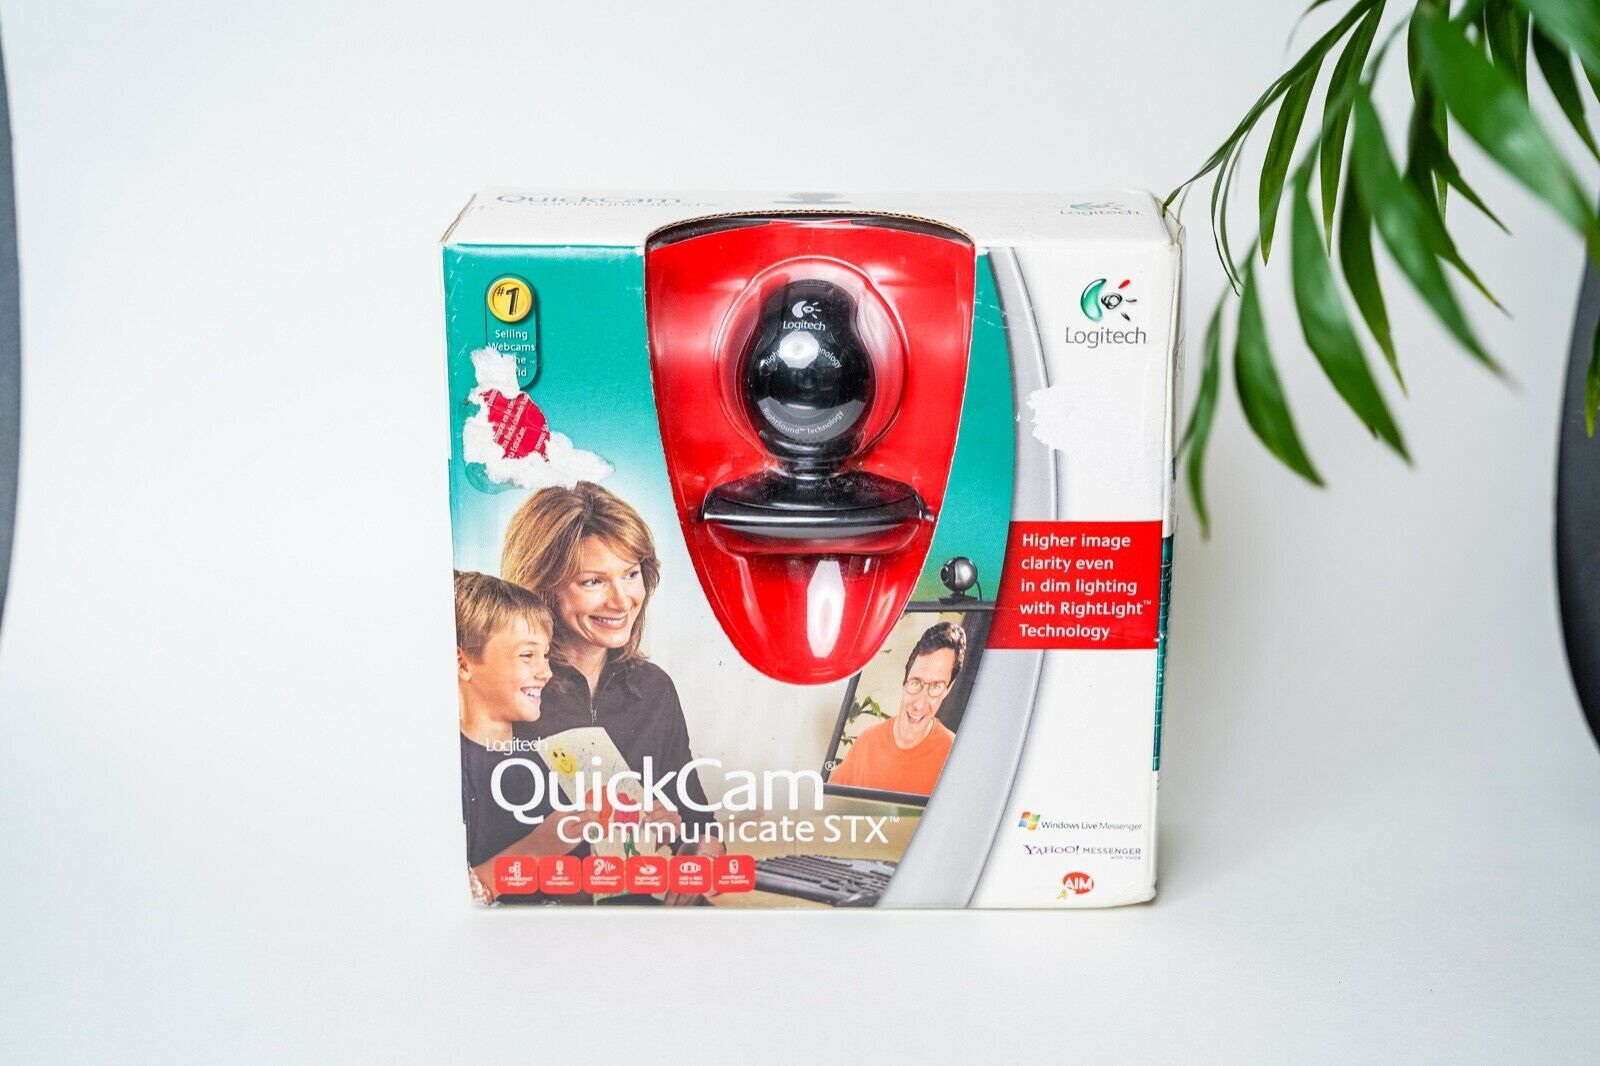 QuickCam Webcam Logitech Communicate STX - $3.47